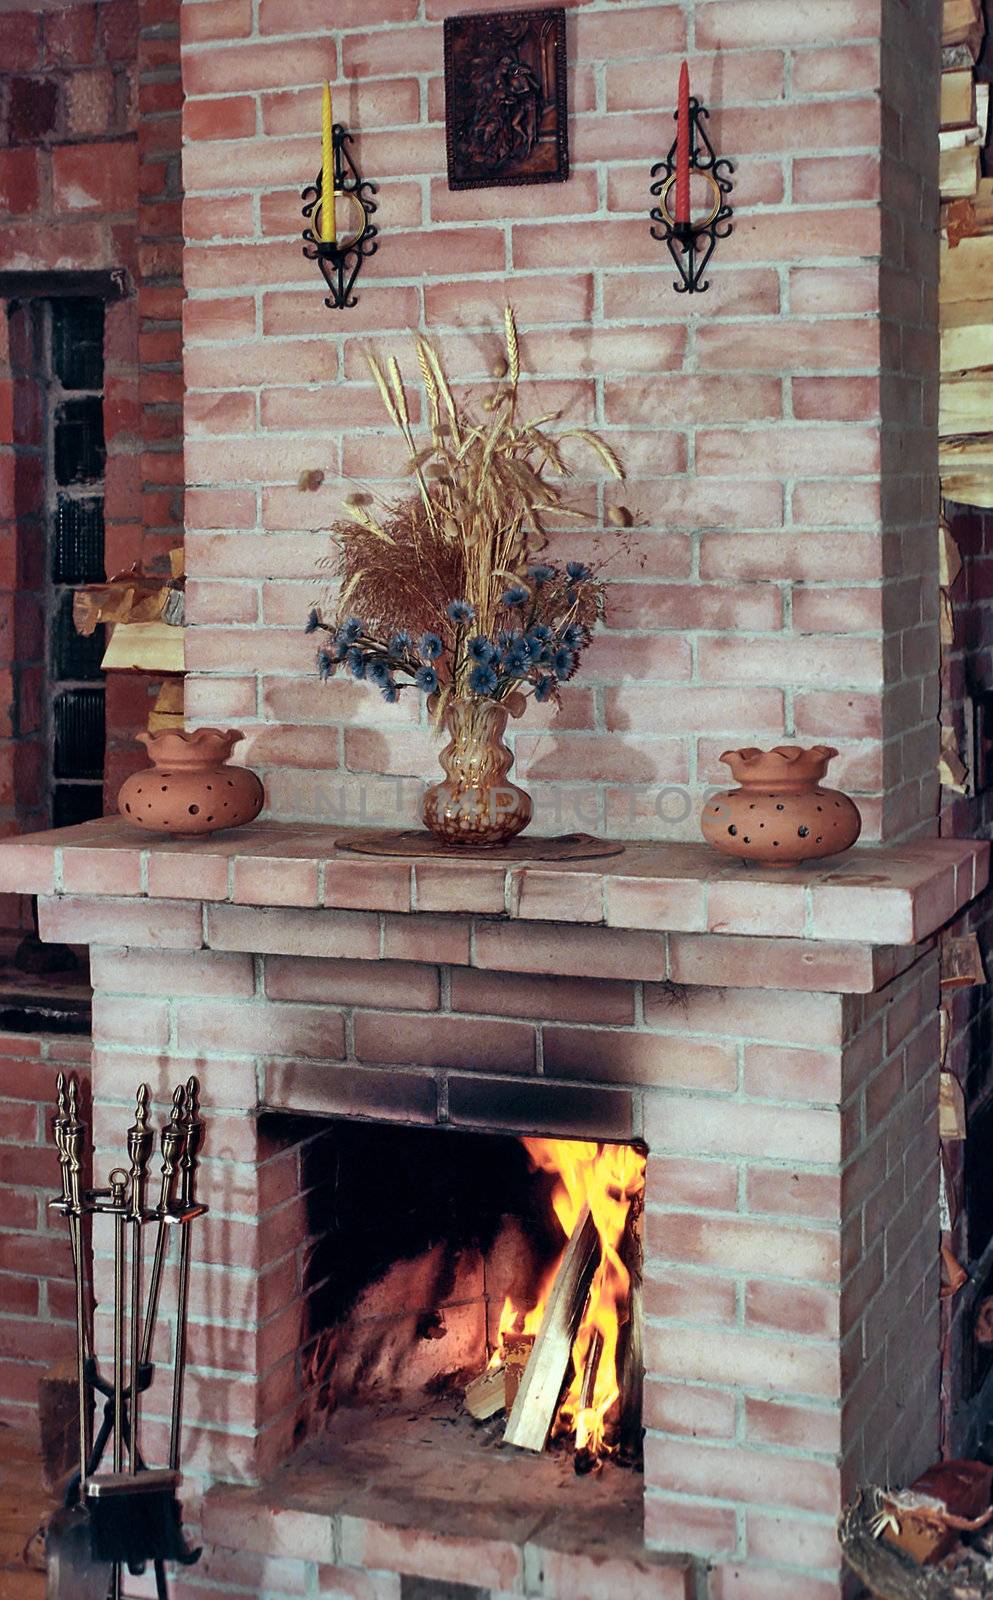 Village kitchen fireplace with dead flowers on mantelshelf